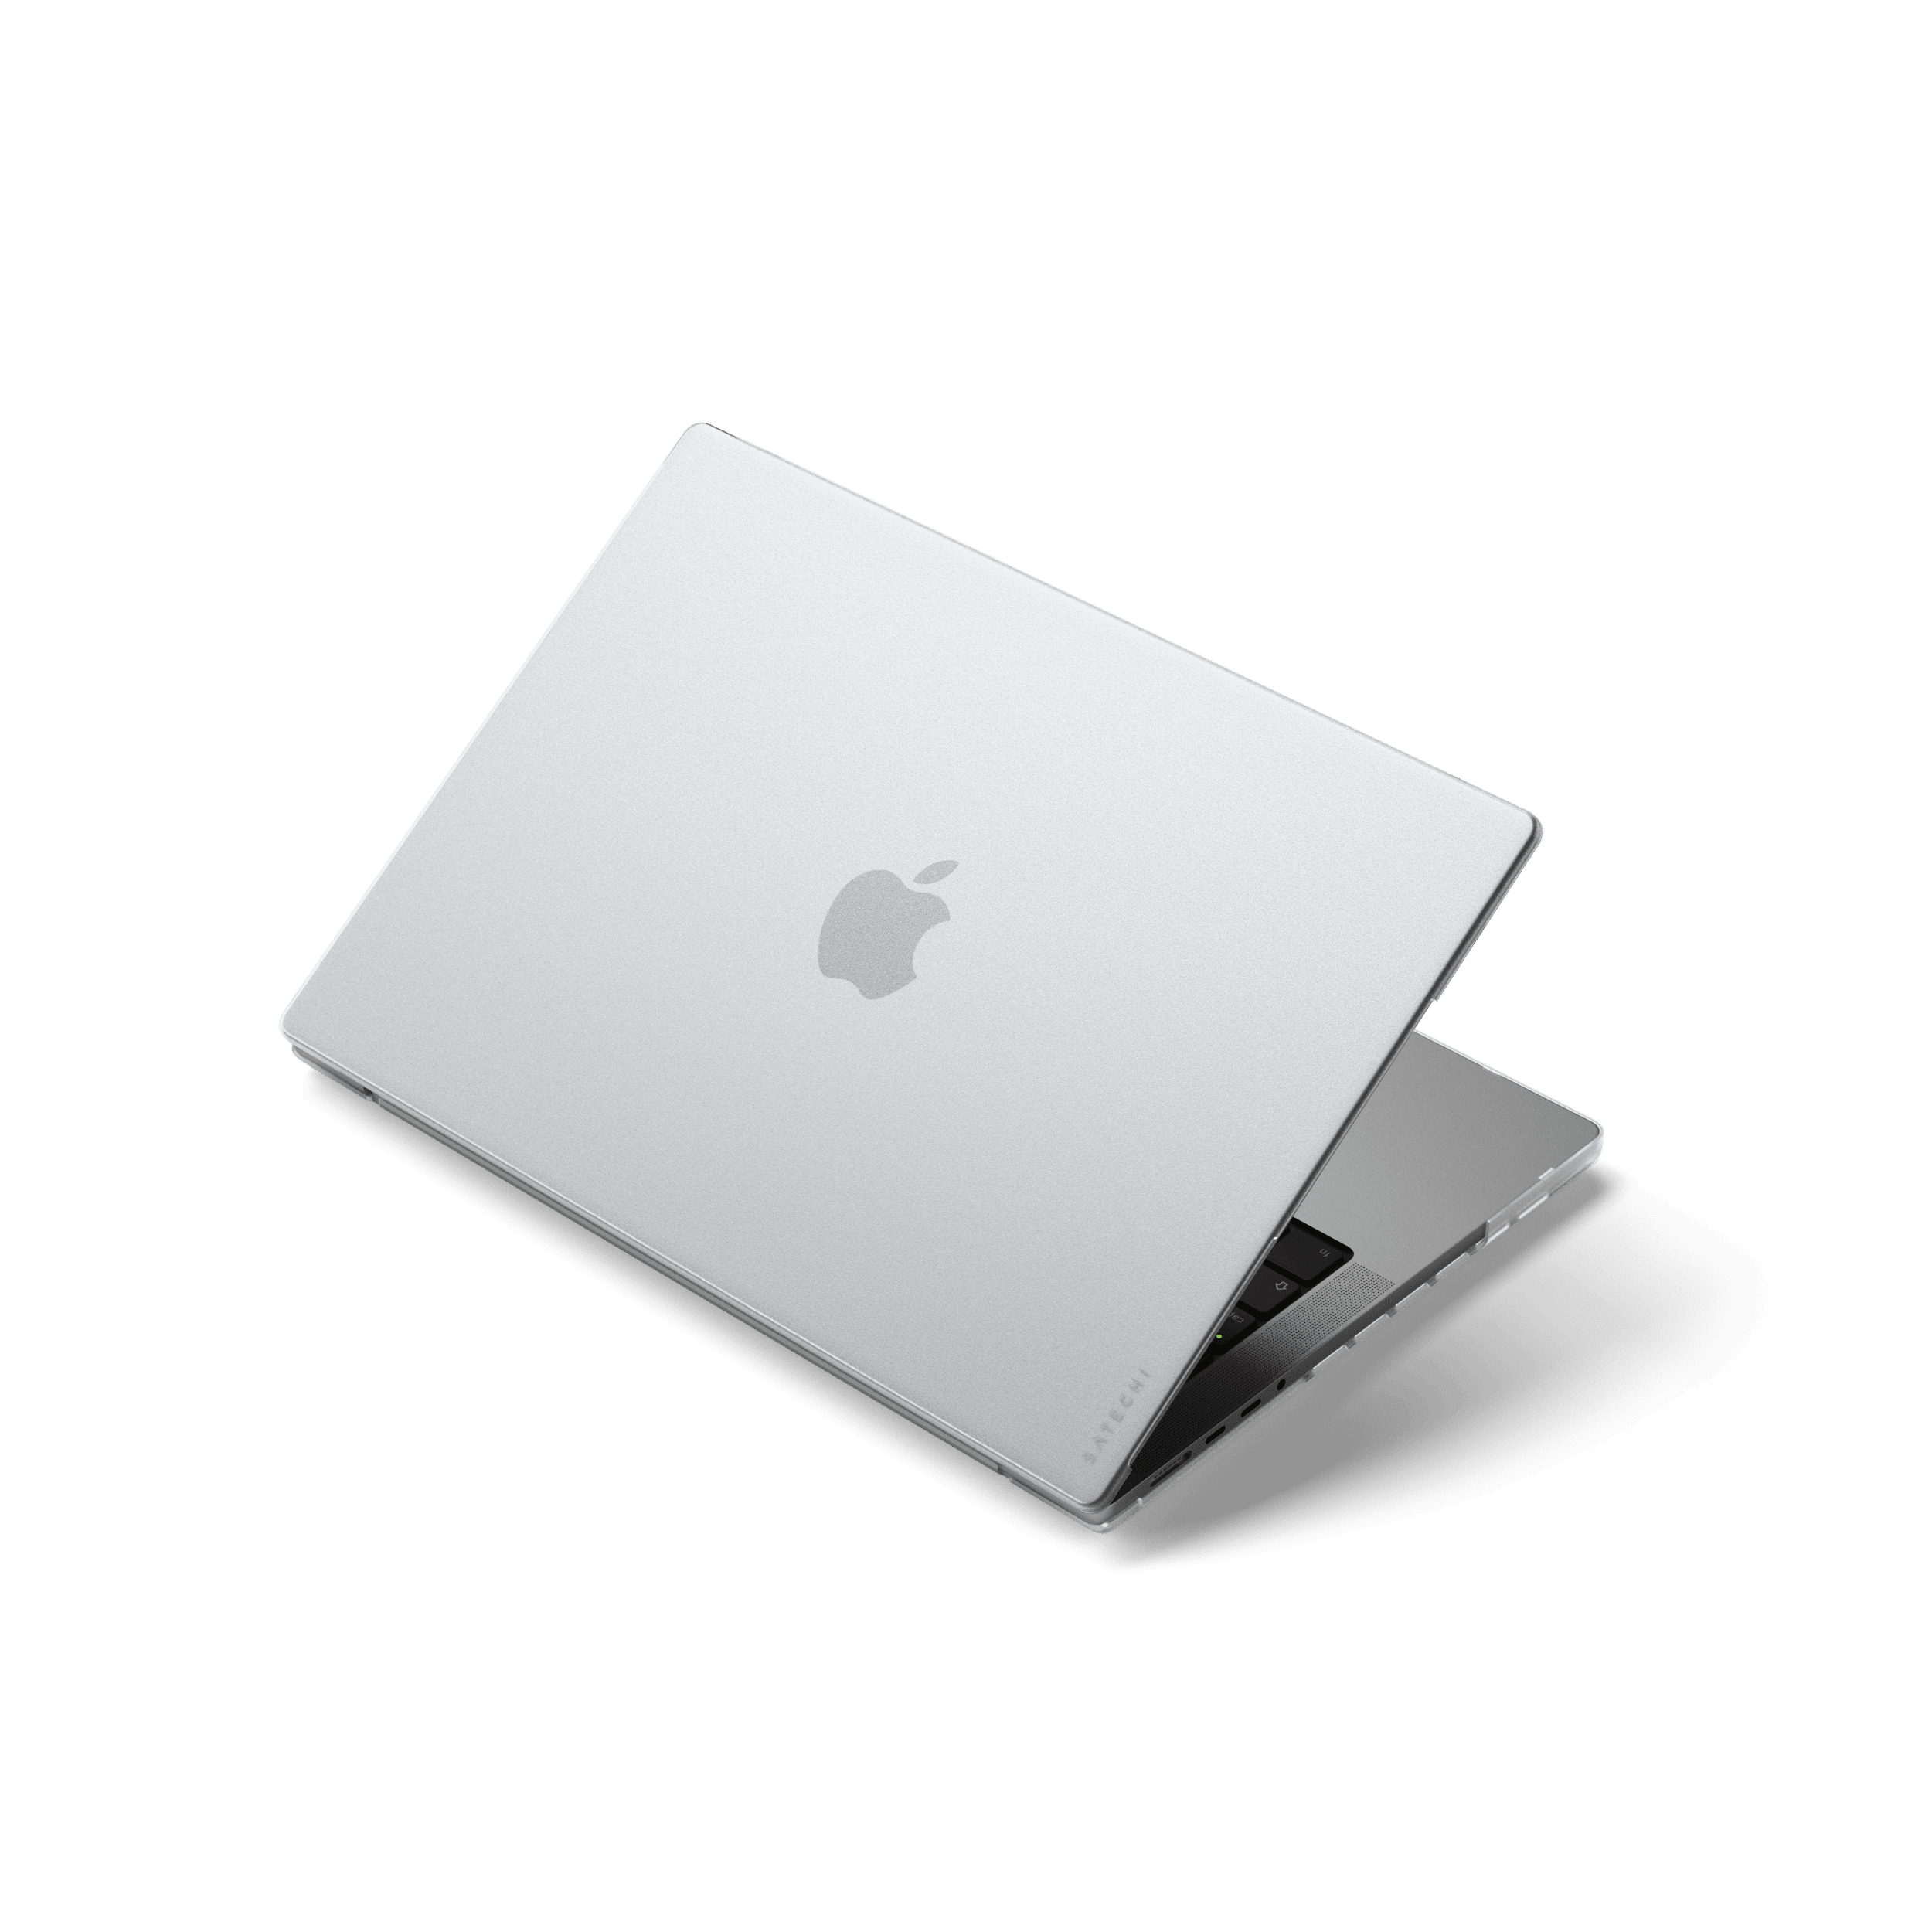  Macbook Pro Accessories